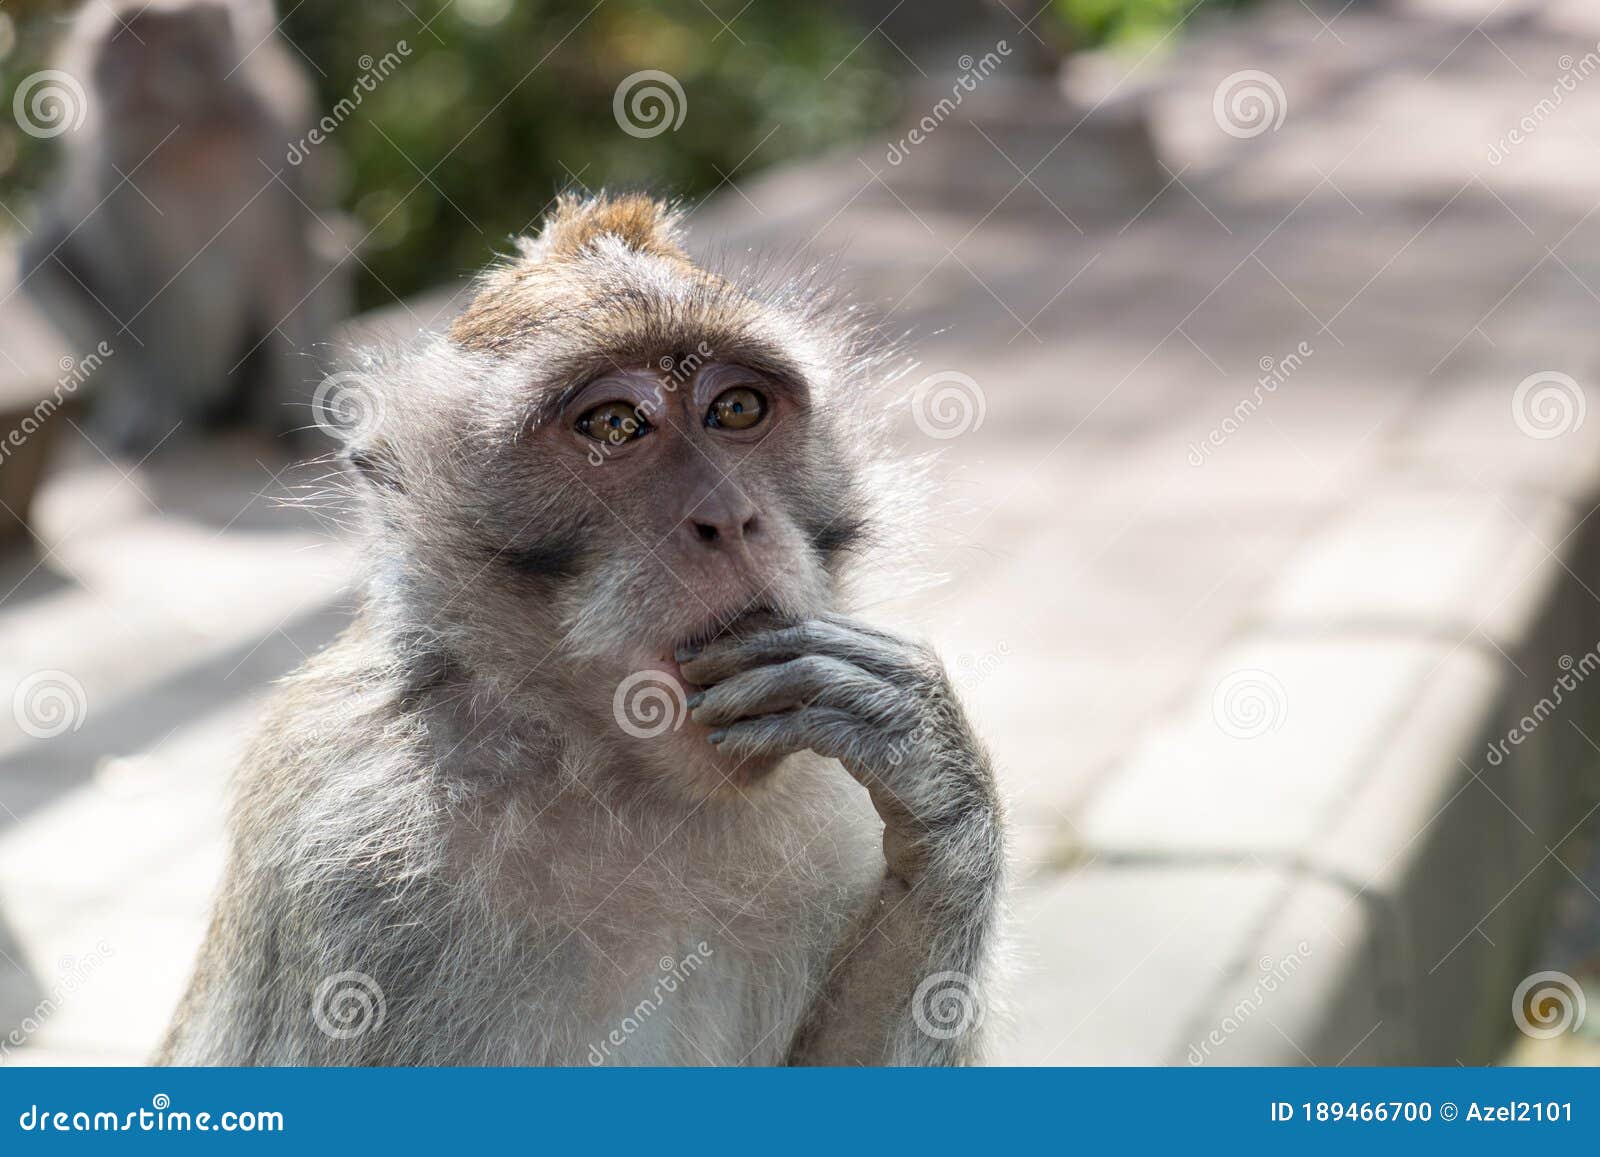 balinese witty local monkey